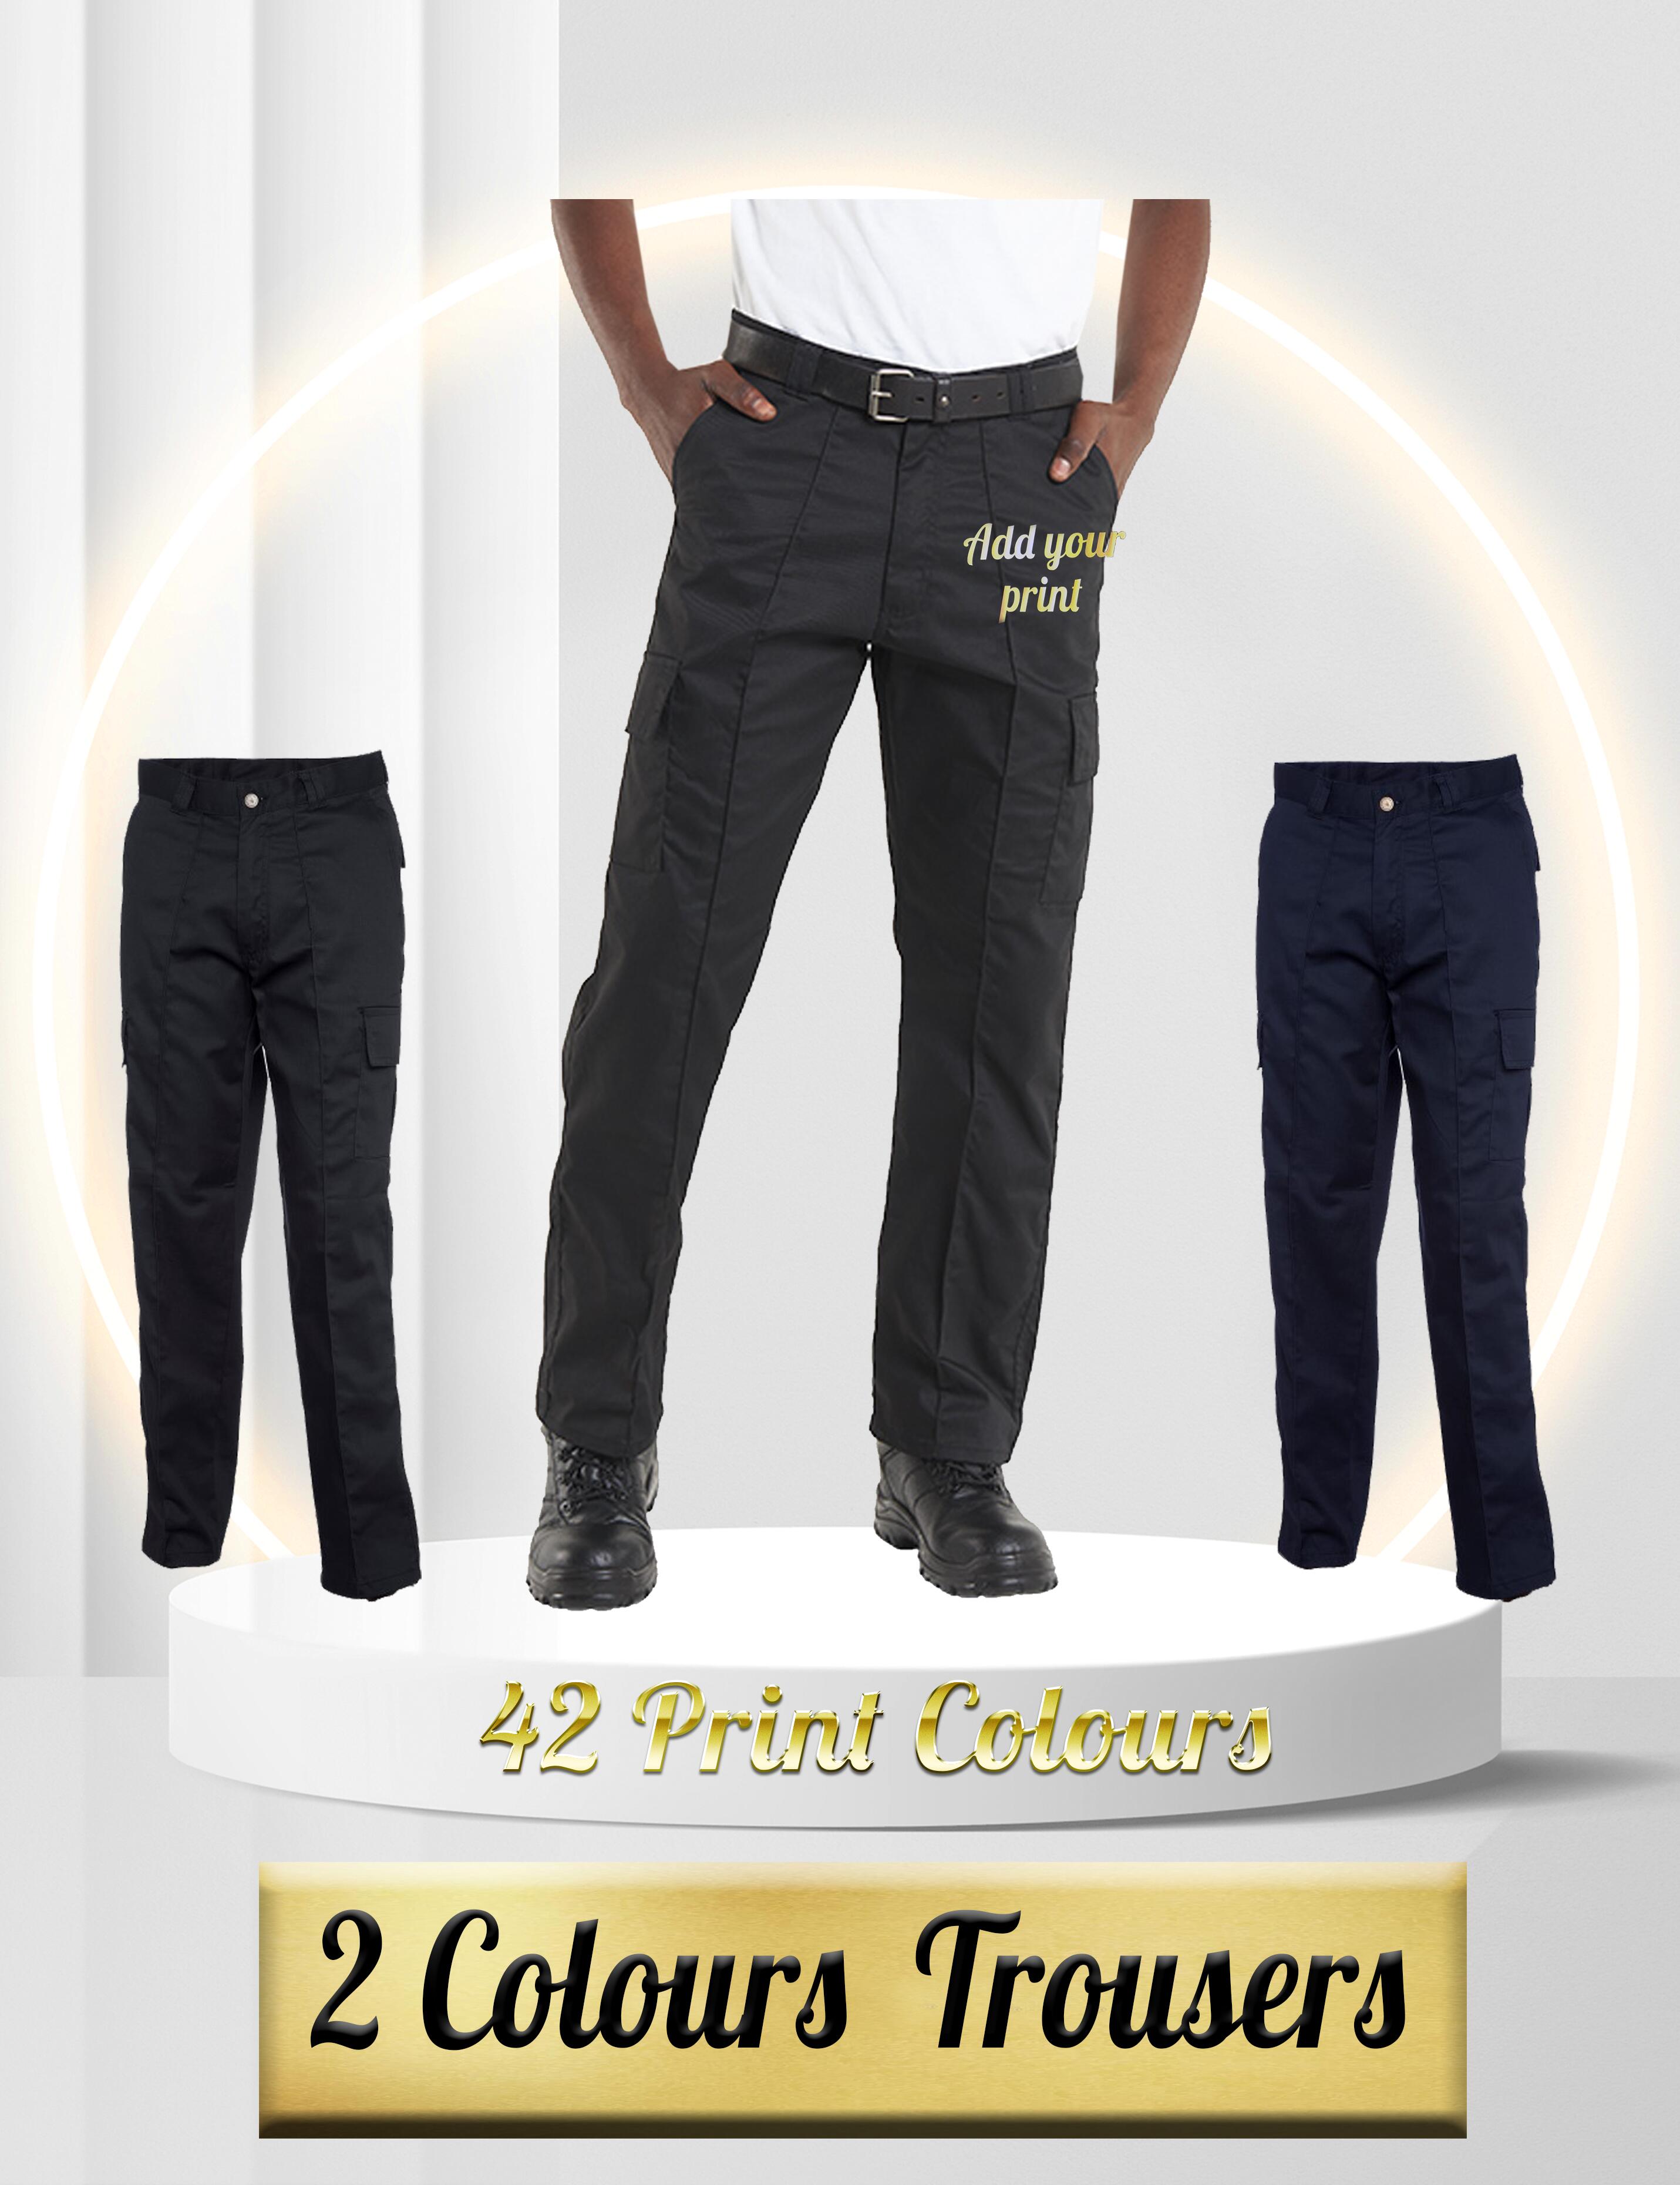 Personalised cargo trouser